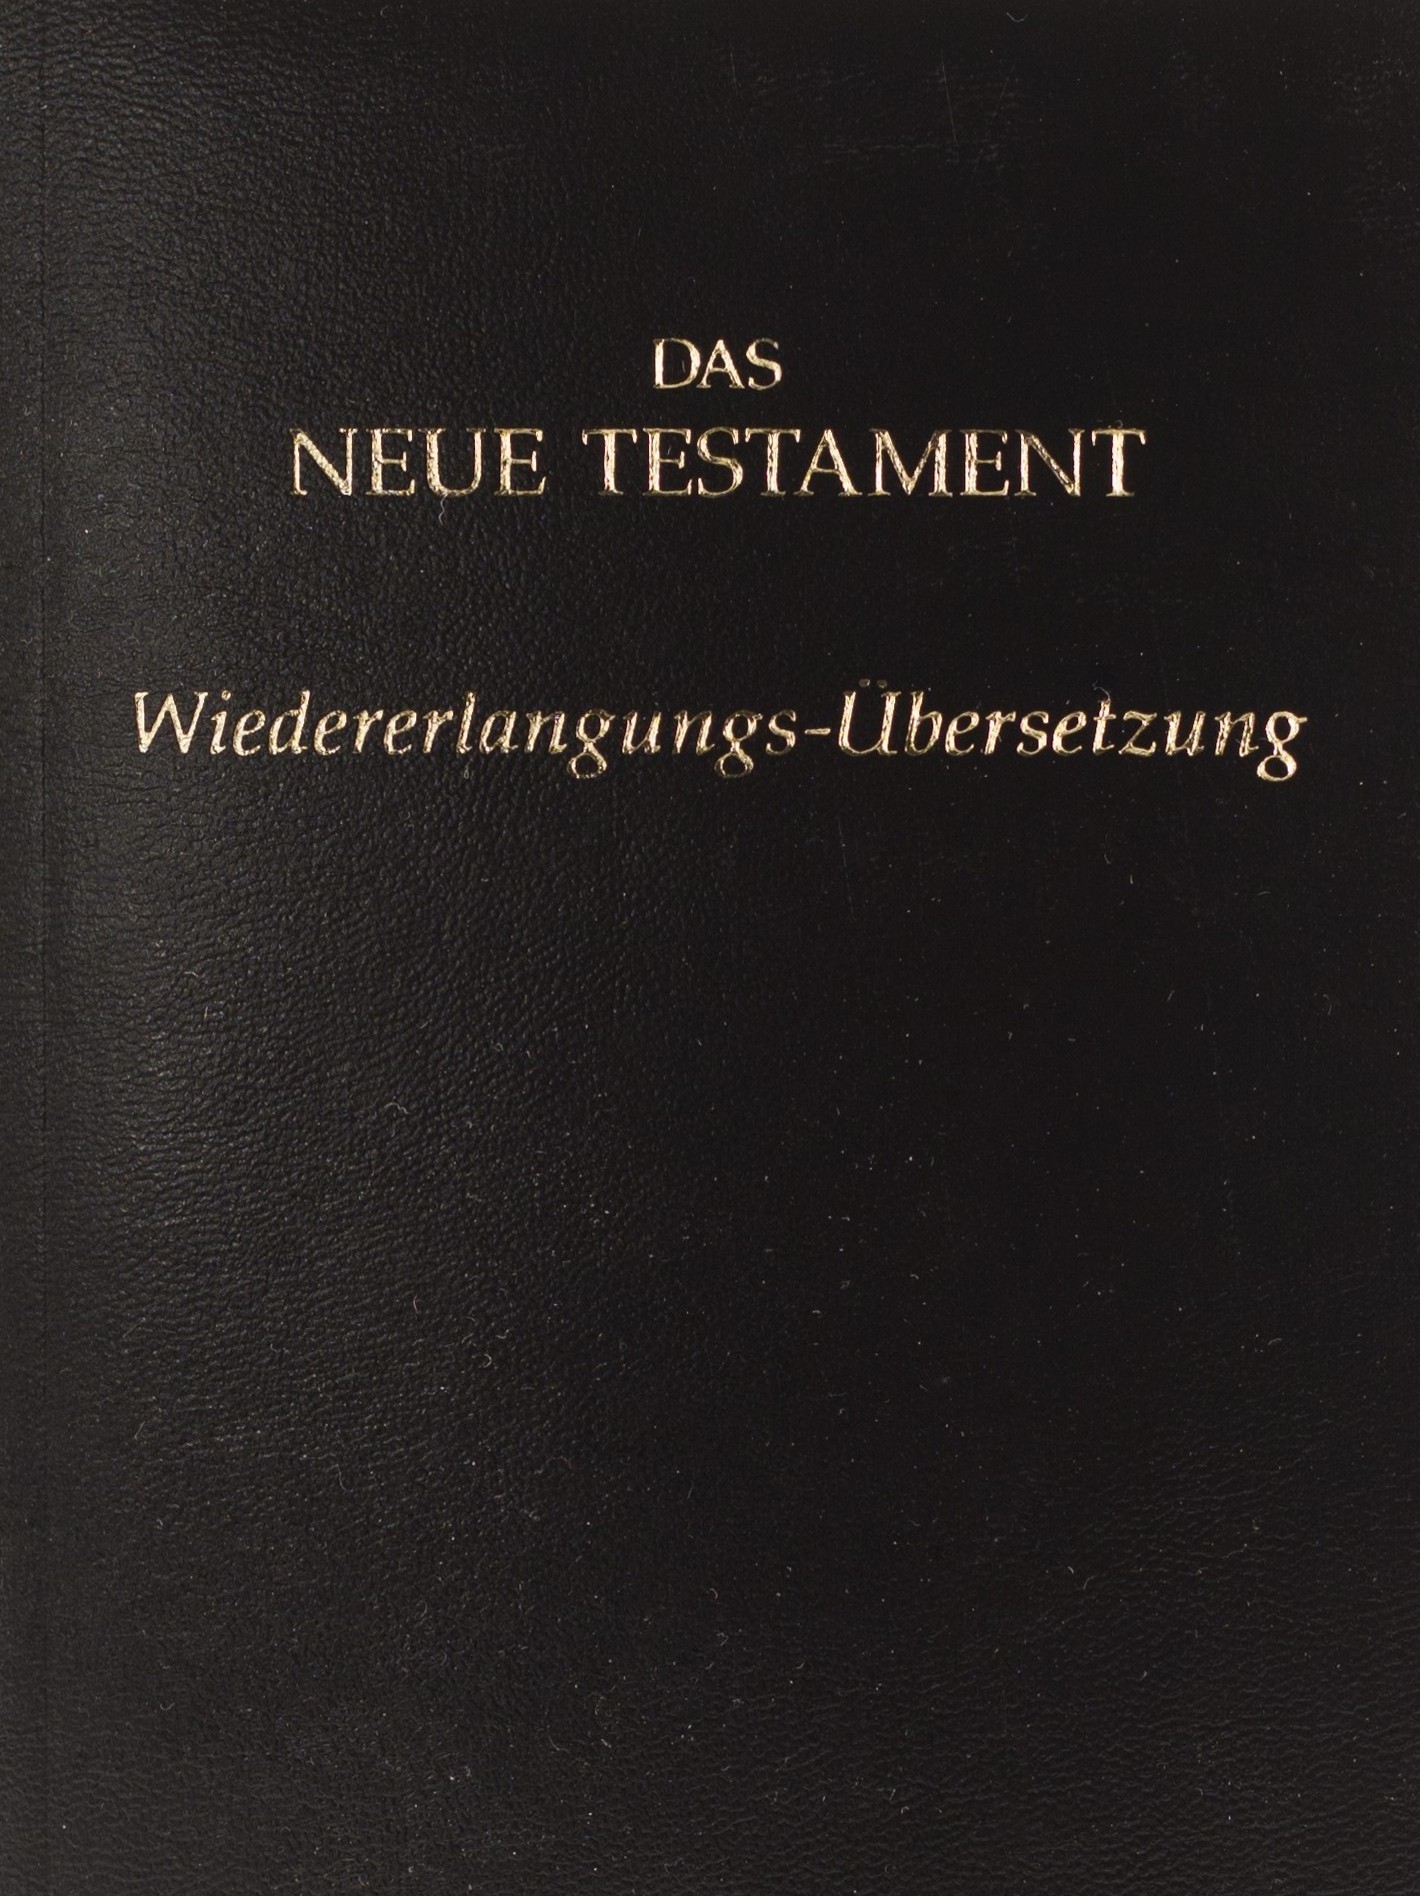 The New Testament Book Cover